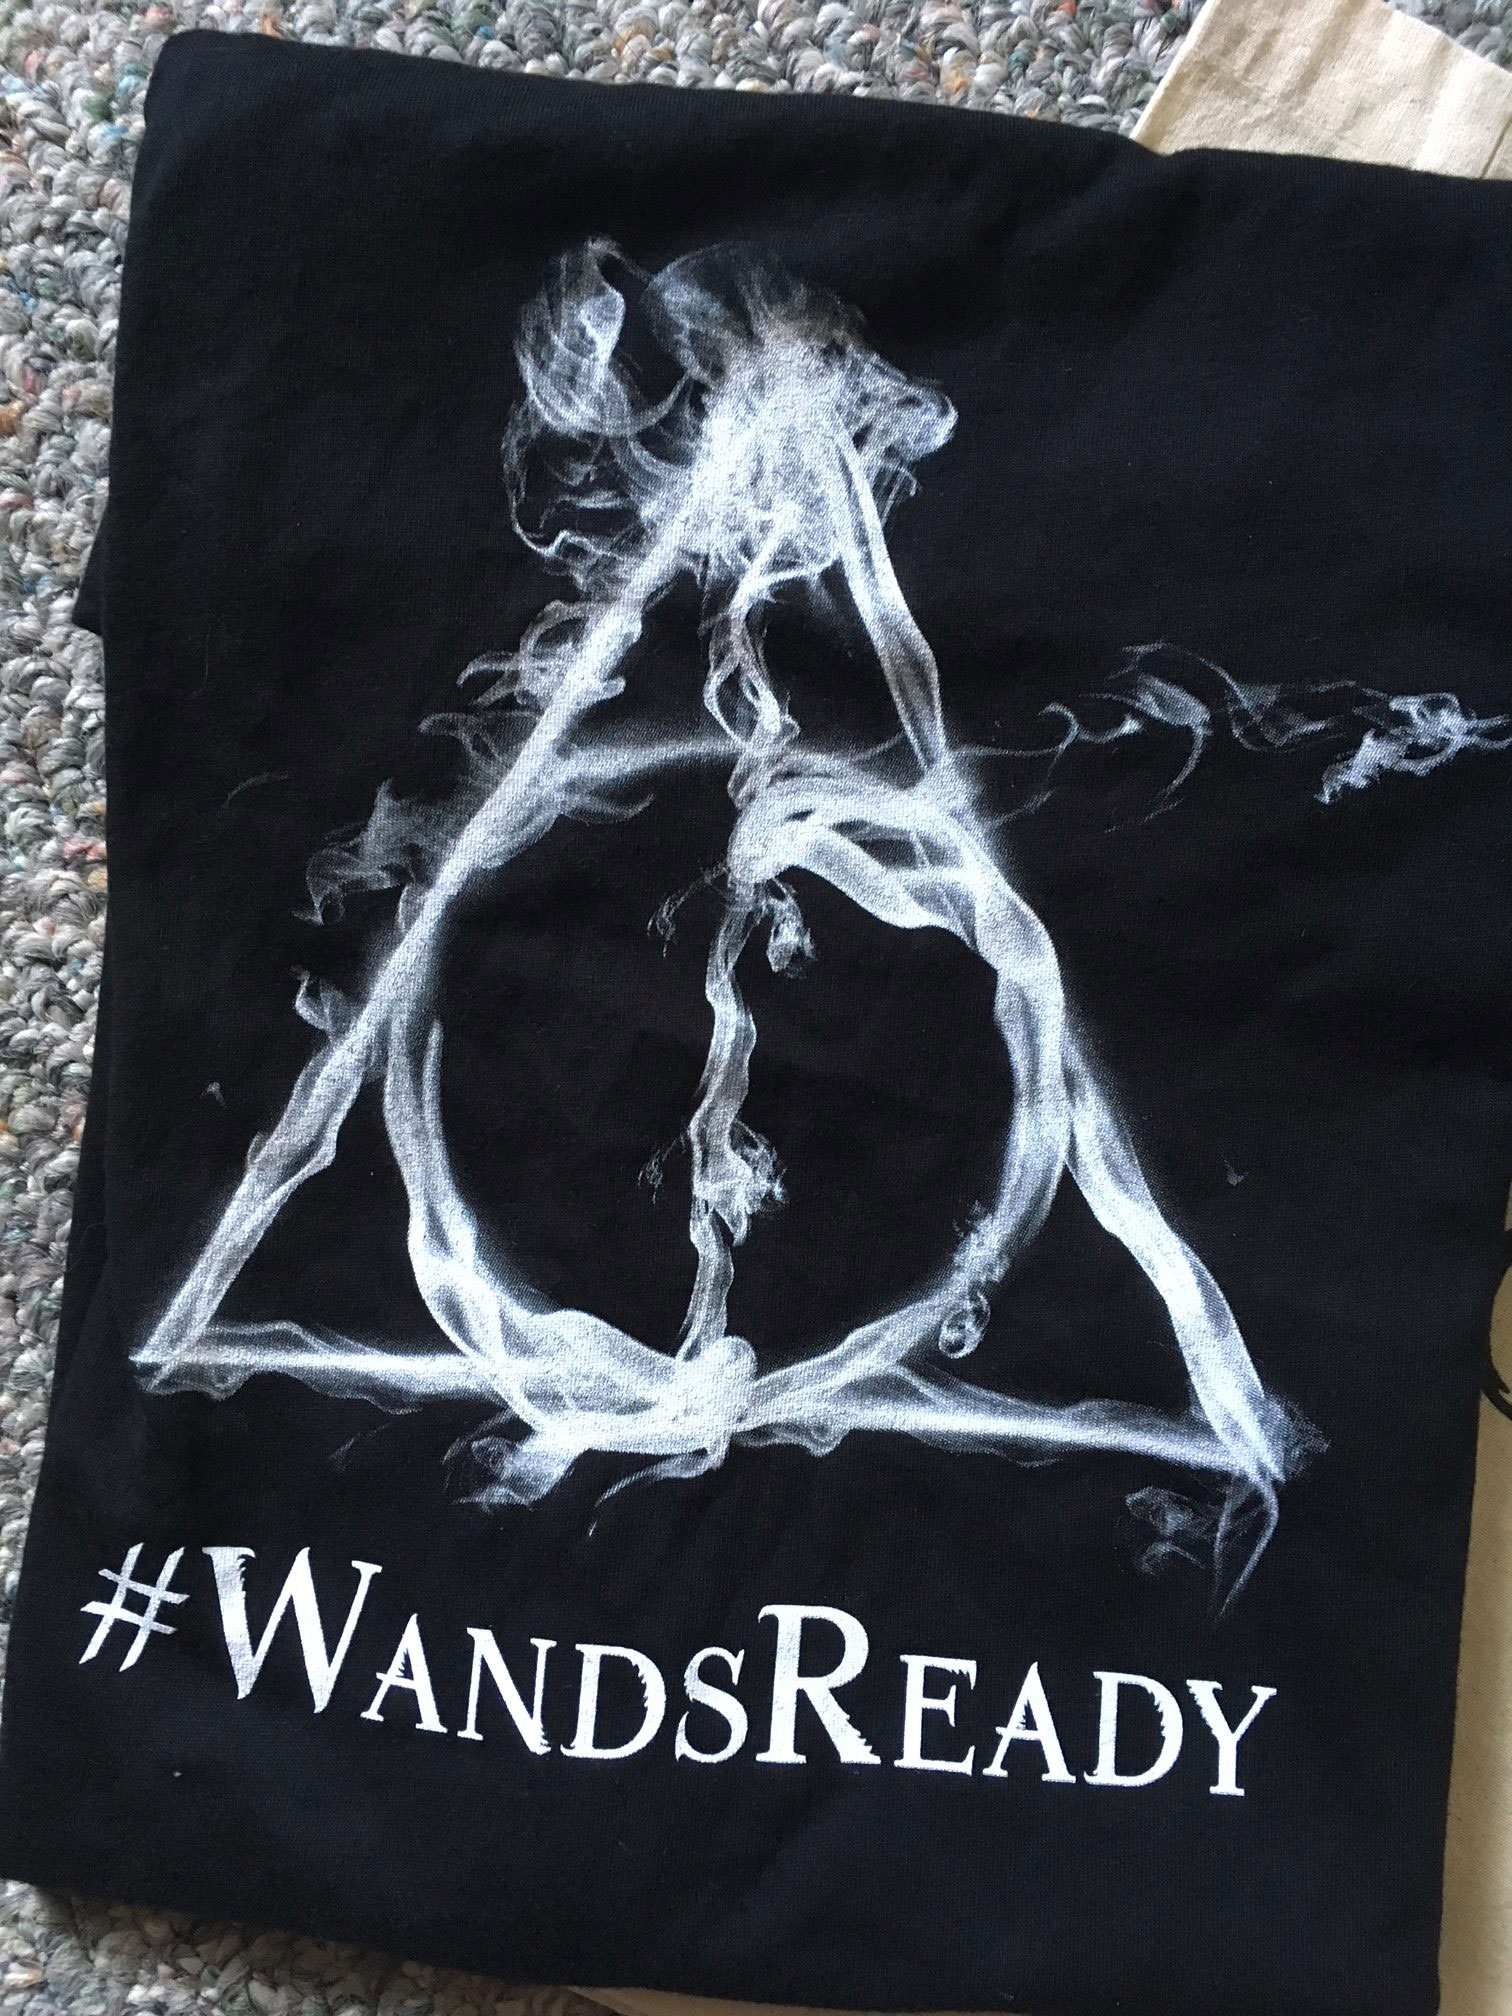 “Fantastic Beasts: The Crimes of Grindelwald” back side of T-shirt showing Wizarding World logo